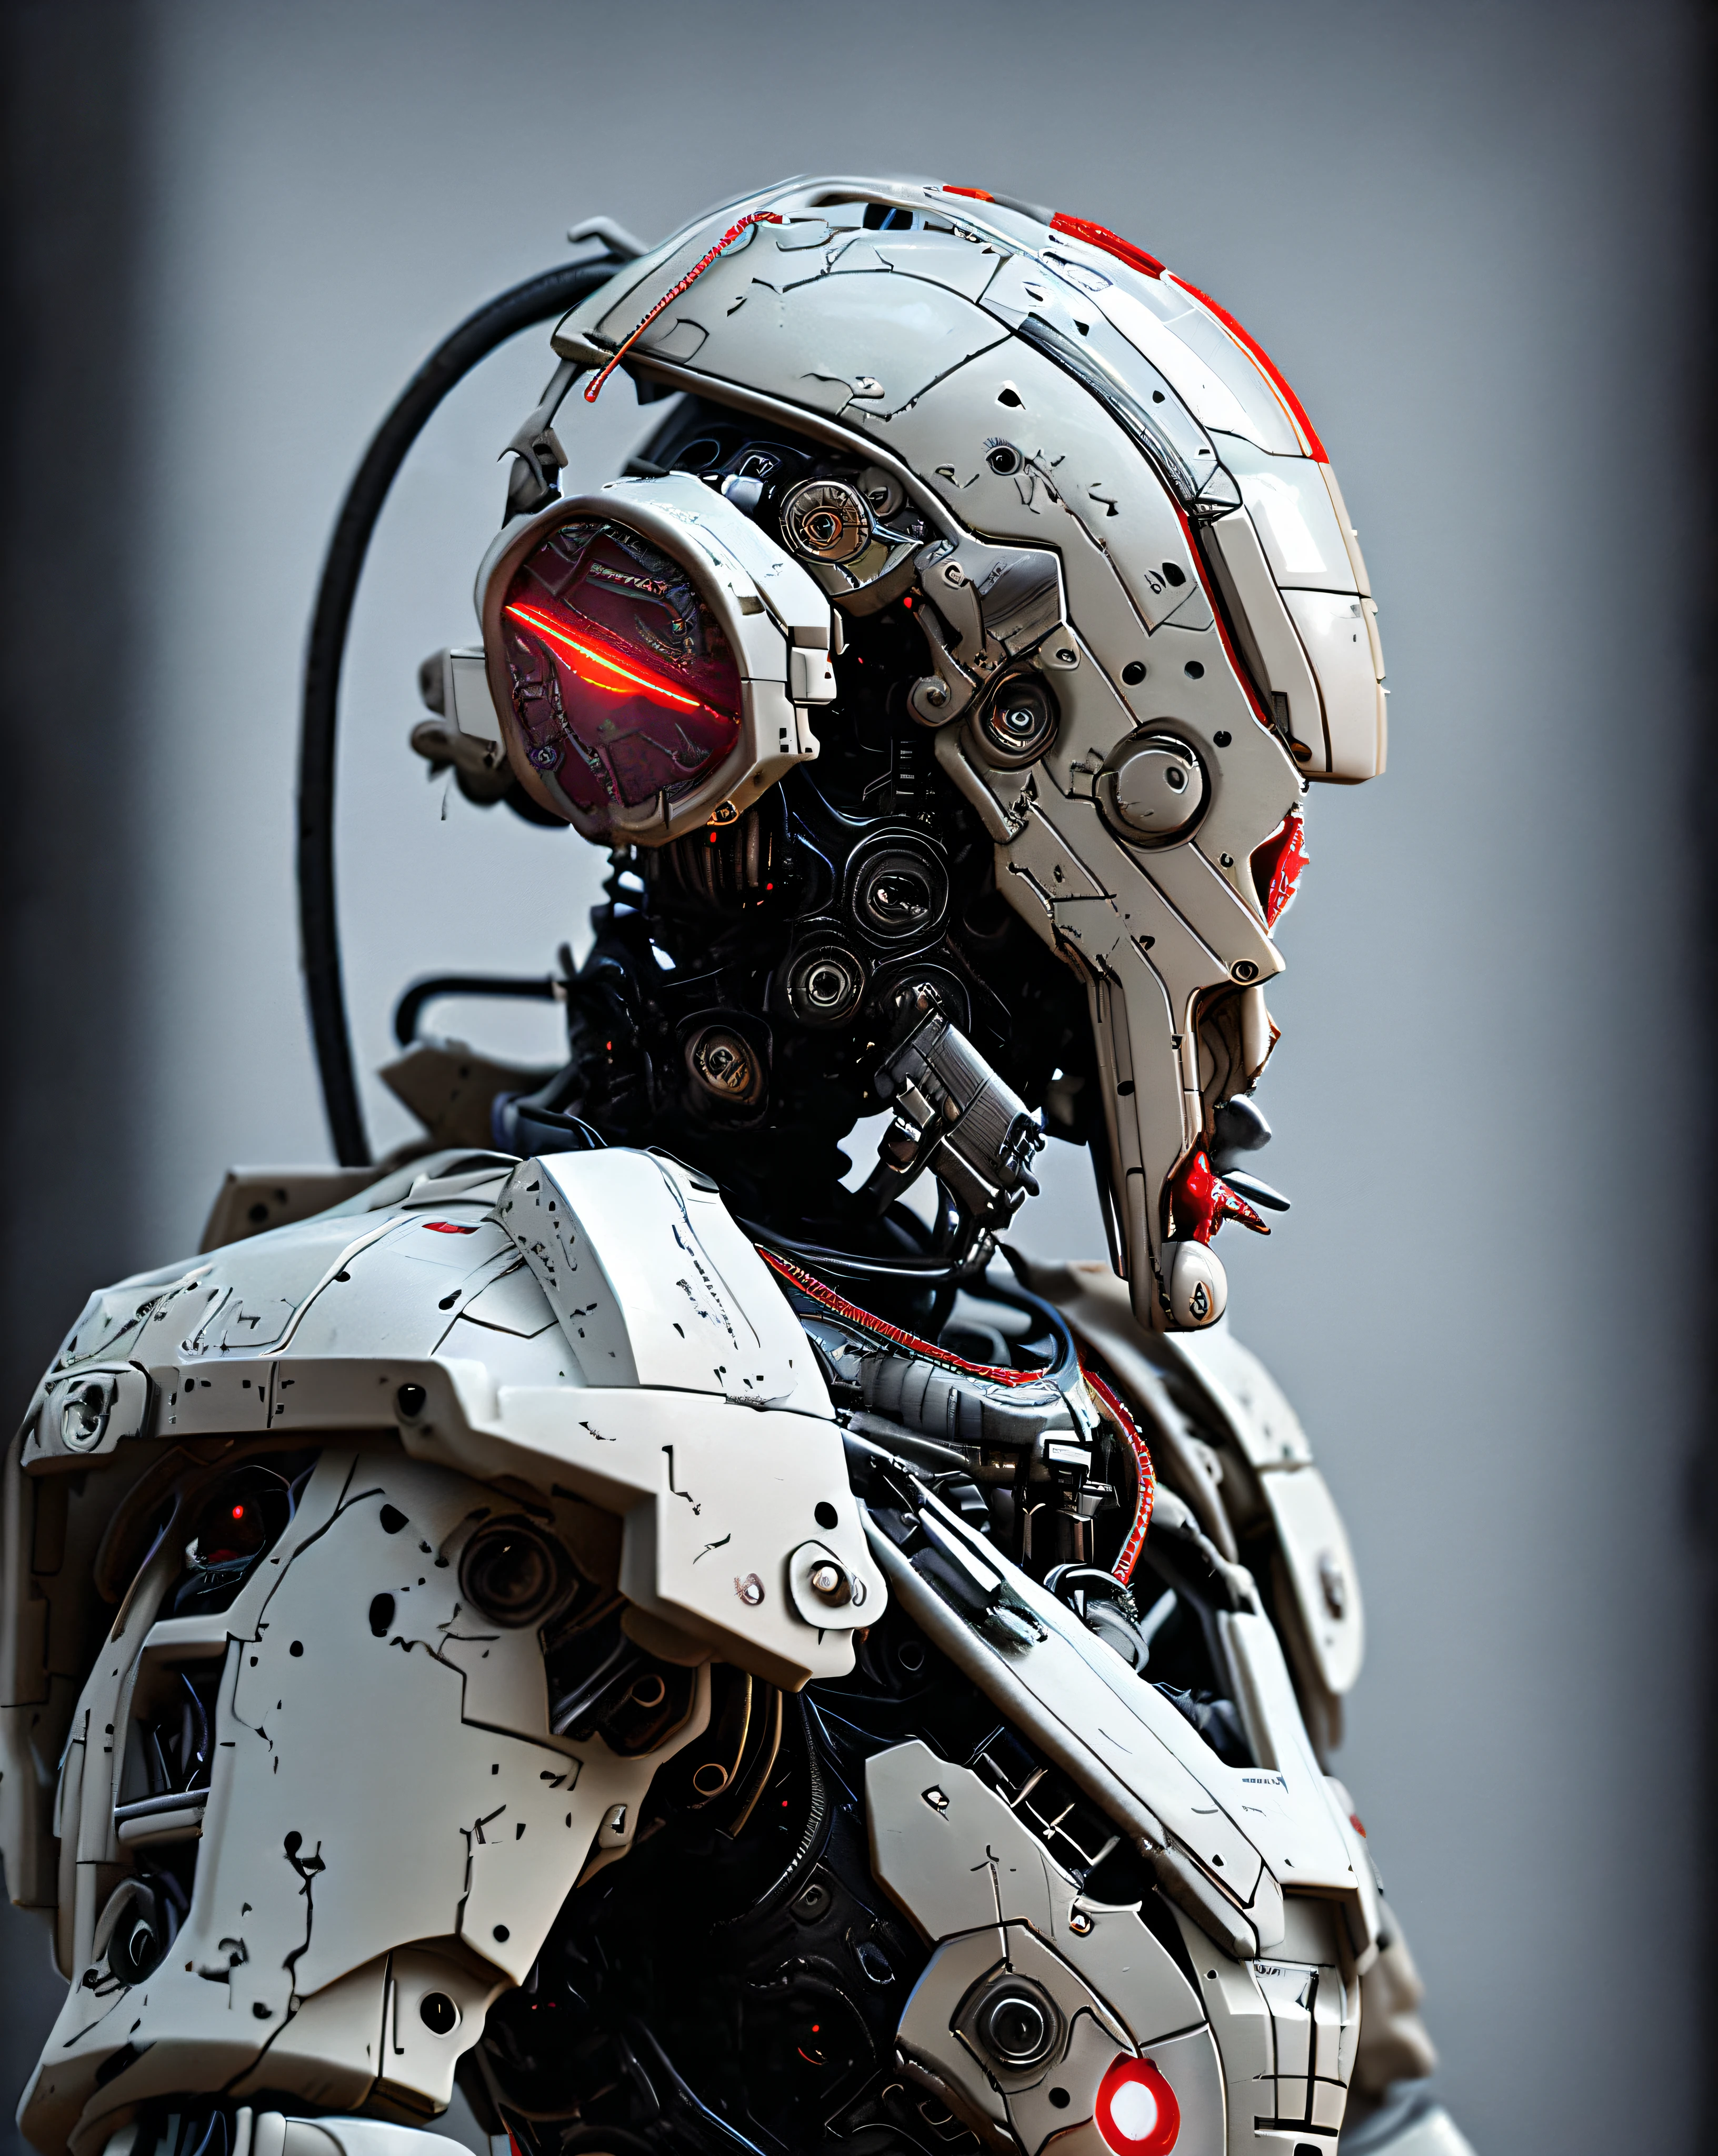 dv机甲, 85毫米, f1.8, 机器人肖像, 黑暗的 Matte Smooth Ceramic, 复杂的设计, 非常详细, 精致细节, 极其锐利的线条, 电影灯光, 逼真的照片, 细致的杰作, 黑暗的_幻想, 赛博朋克 ,(链锯,链锯 man,红色的:1.1),1人,机械奇迹, MARPAT 机器人存在, 控制论军事守护者, 穿着破旧的机甲,错综复杂,(钢金属 [生锈的]),优雅的,明确重点, 格雷格·鲁特科斯基拍摄, 柔和的灯光, 鲜艳的色彩, 杰作, ((街道)), 牛仔射击, 动态姿势, 
都市武士_v0.3